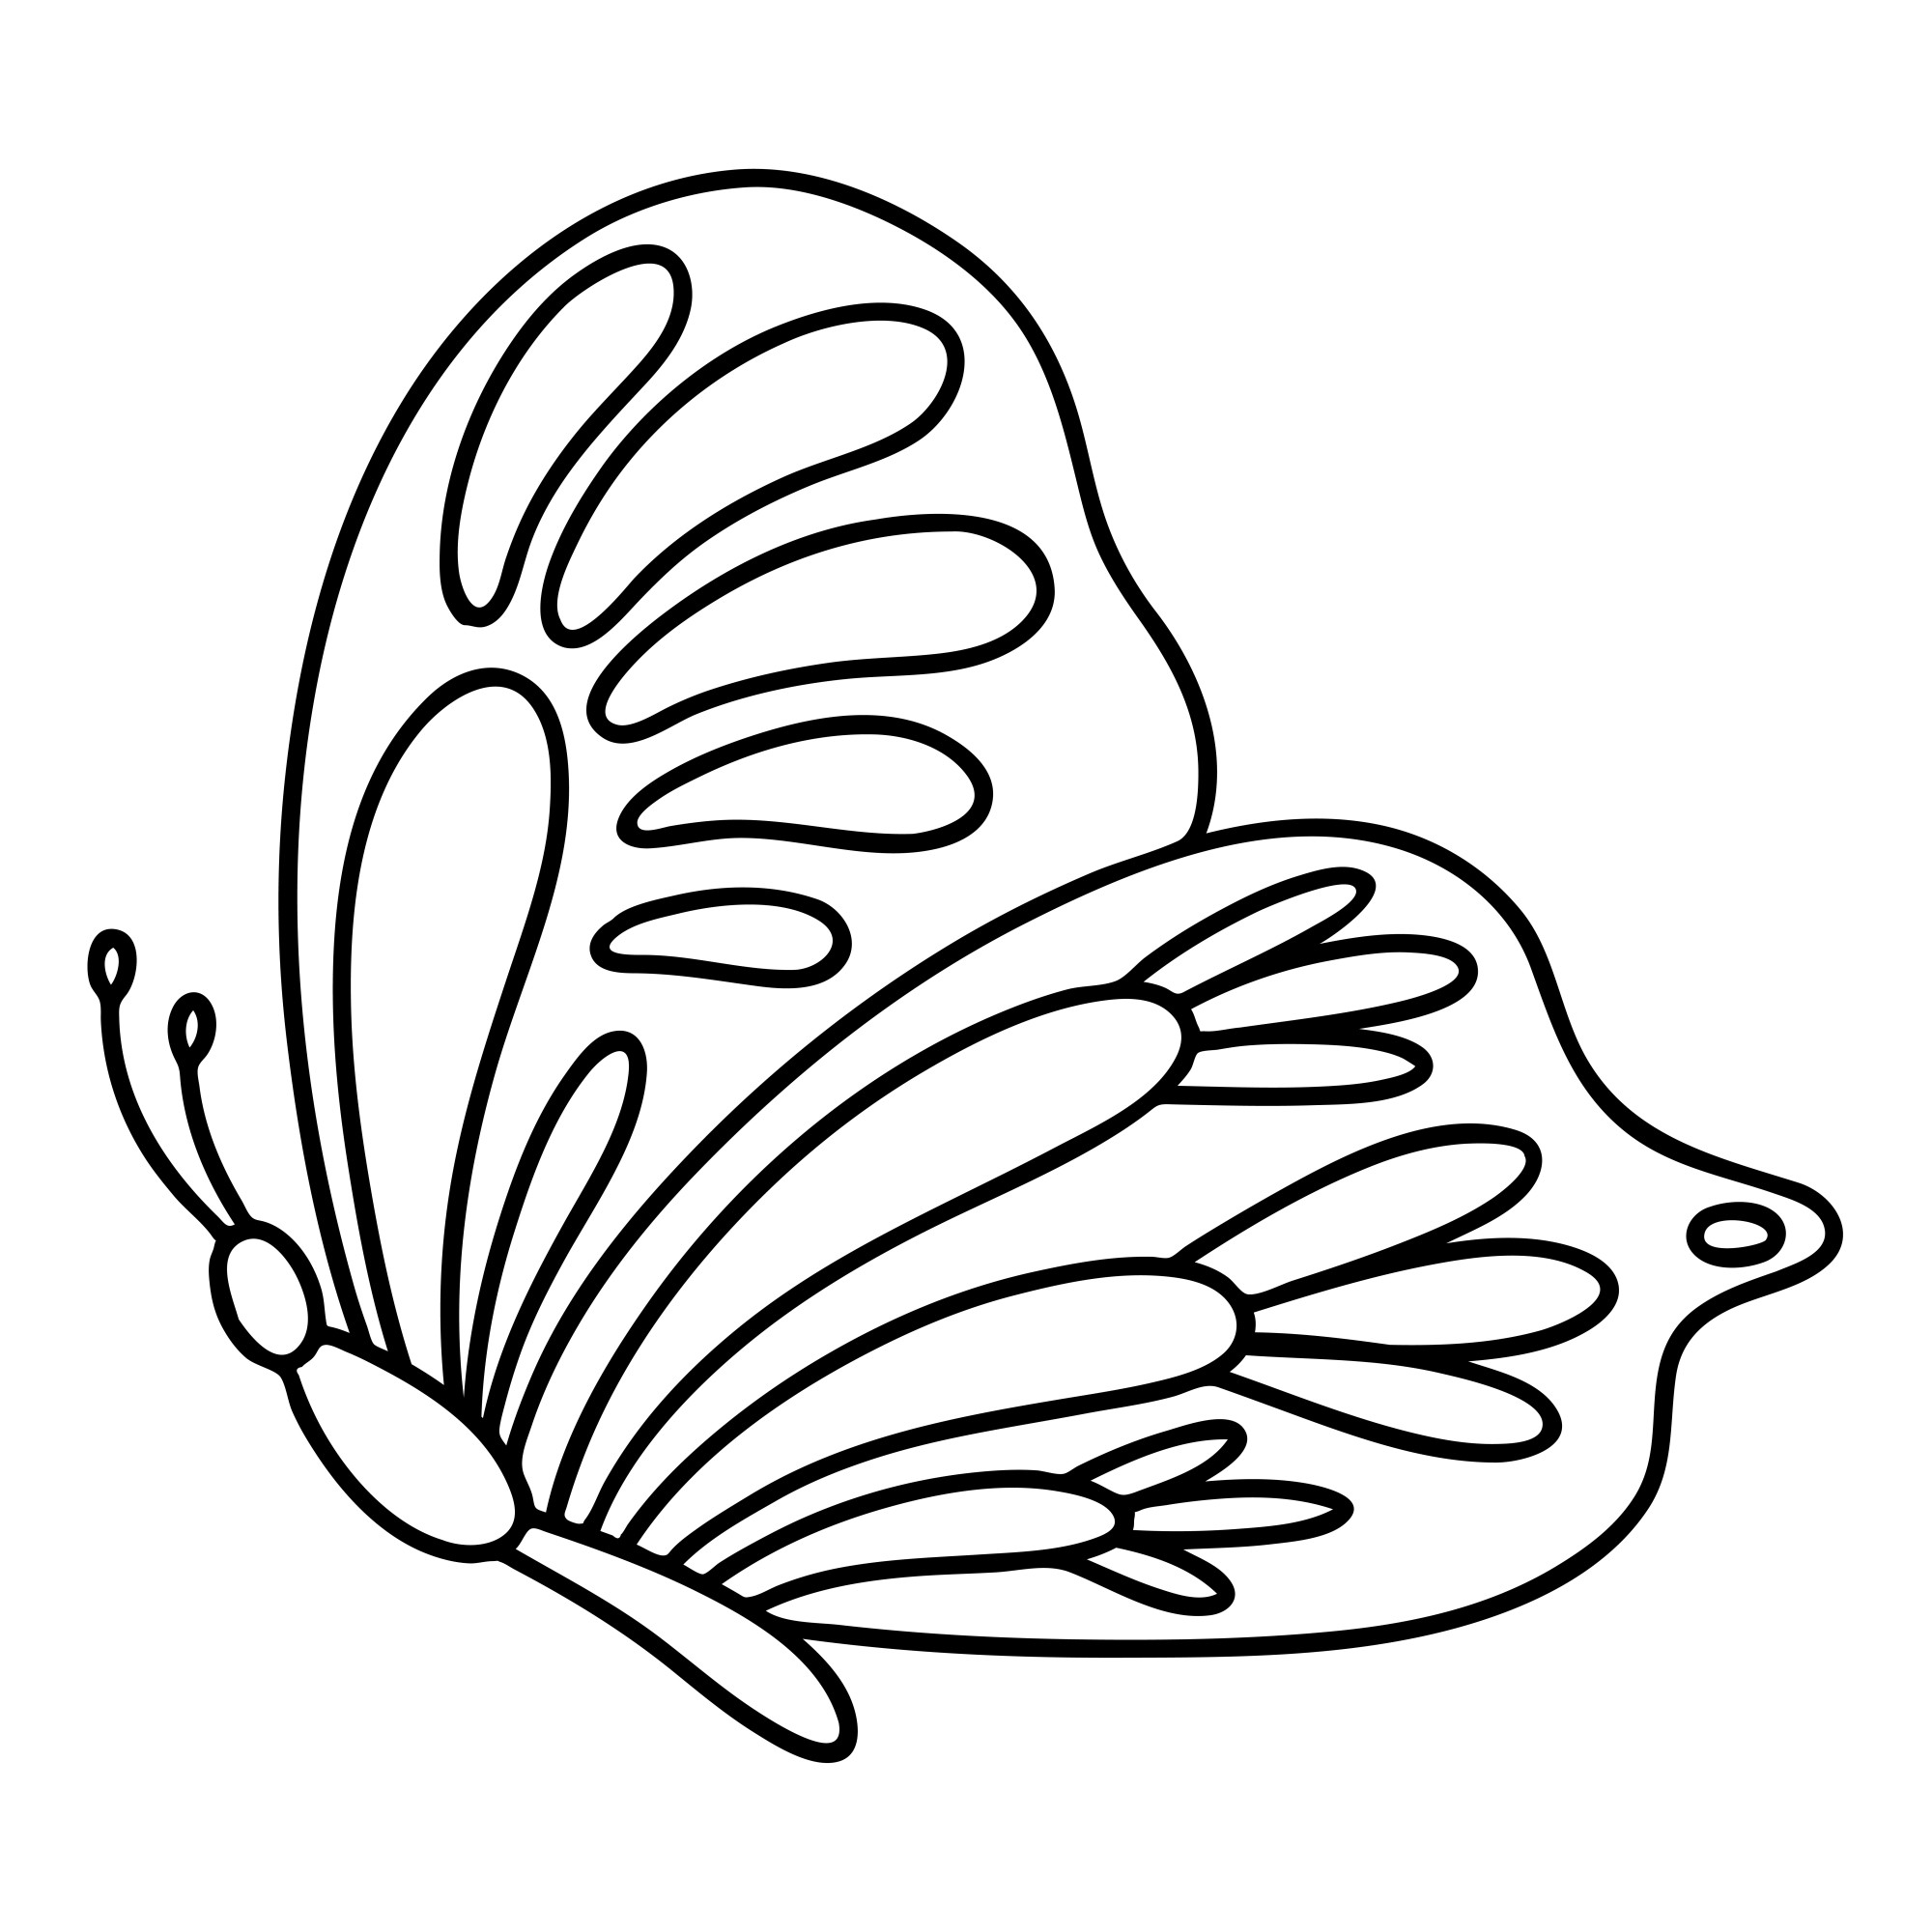 Раскраска для детей: нежная бабочка